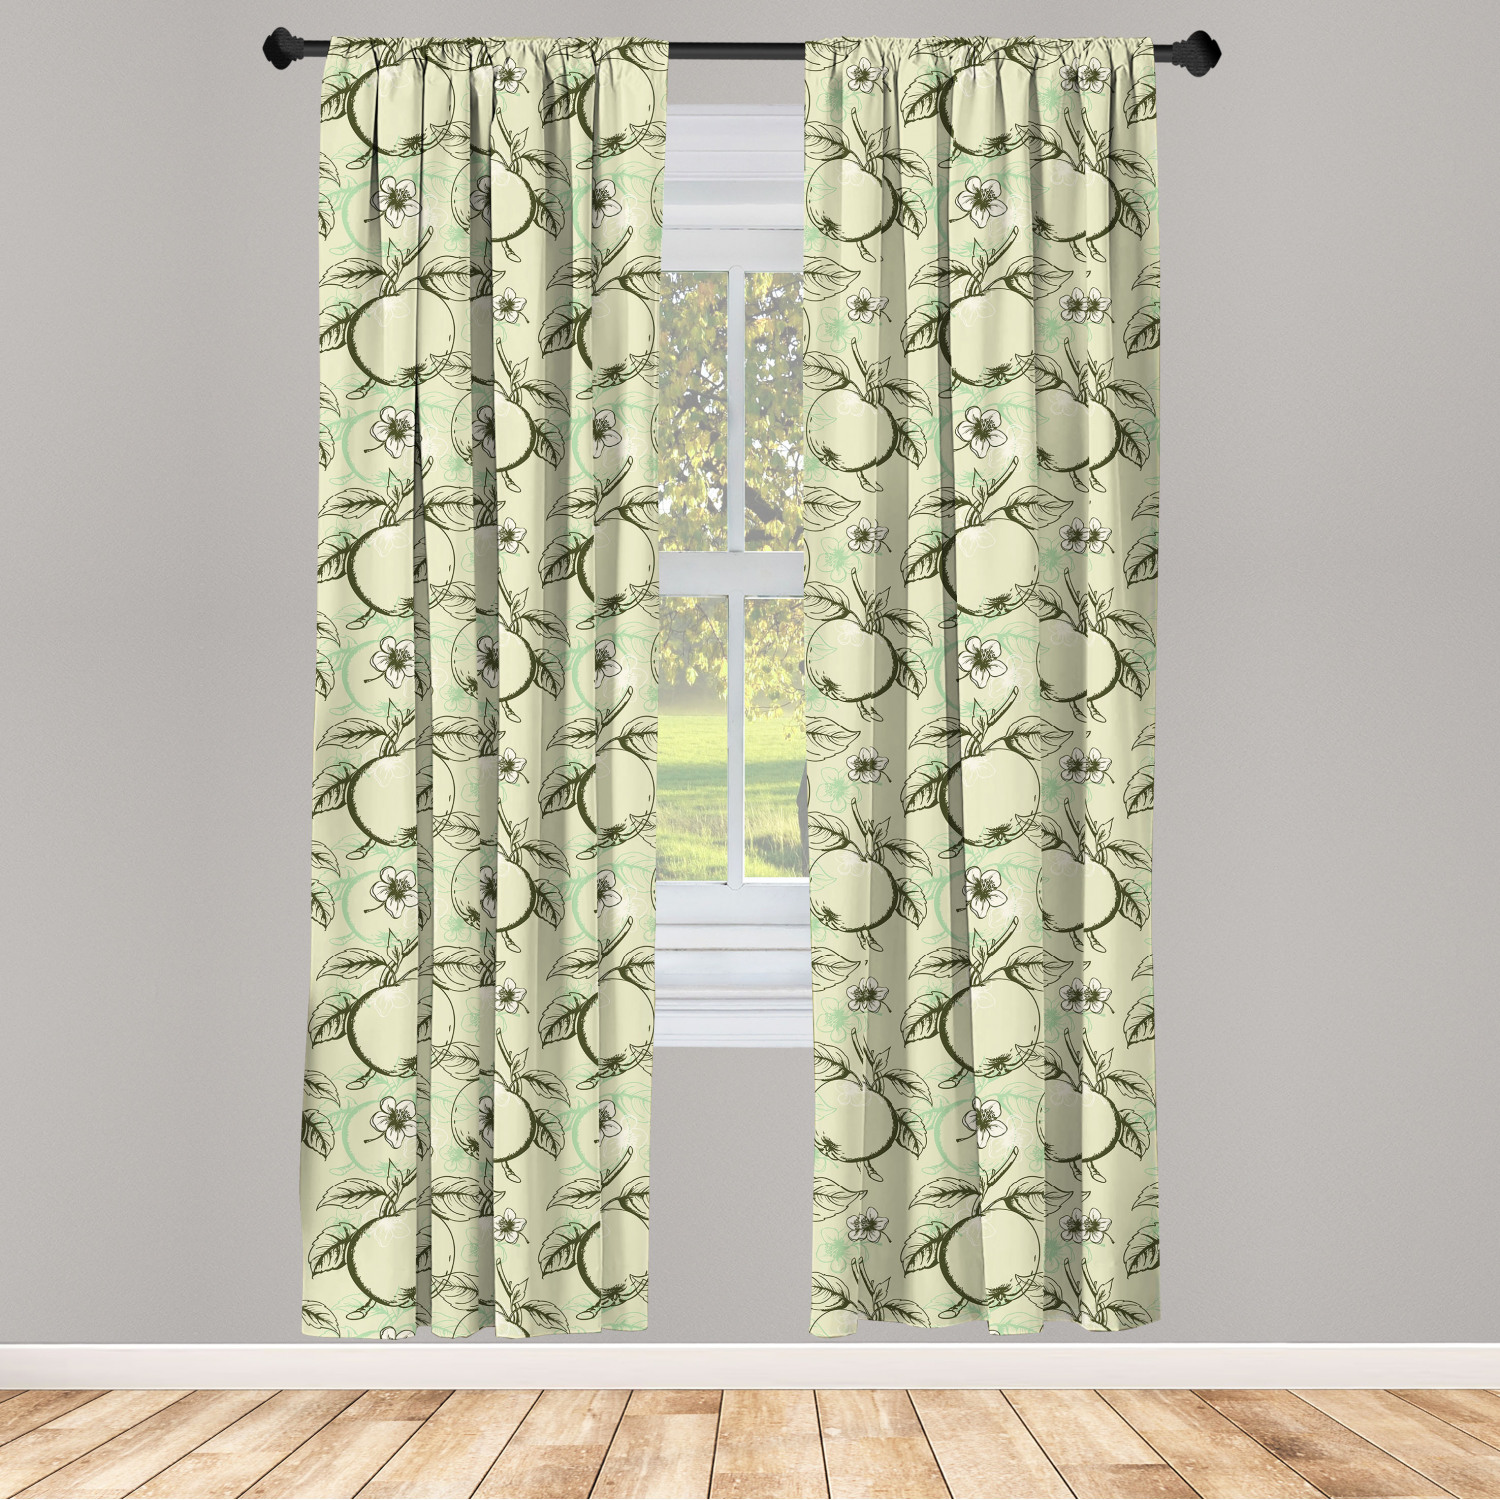 Apple Microfiber Curtains 2 Panel Set Living Room Bedroom in 3 Sizes 